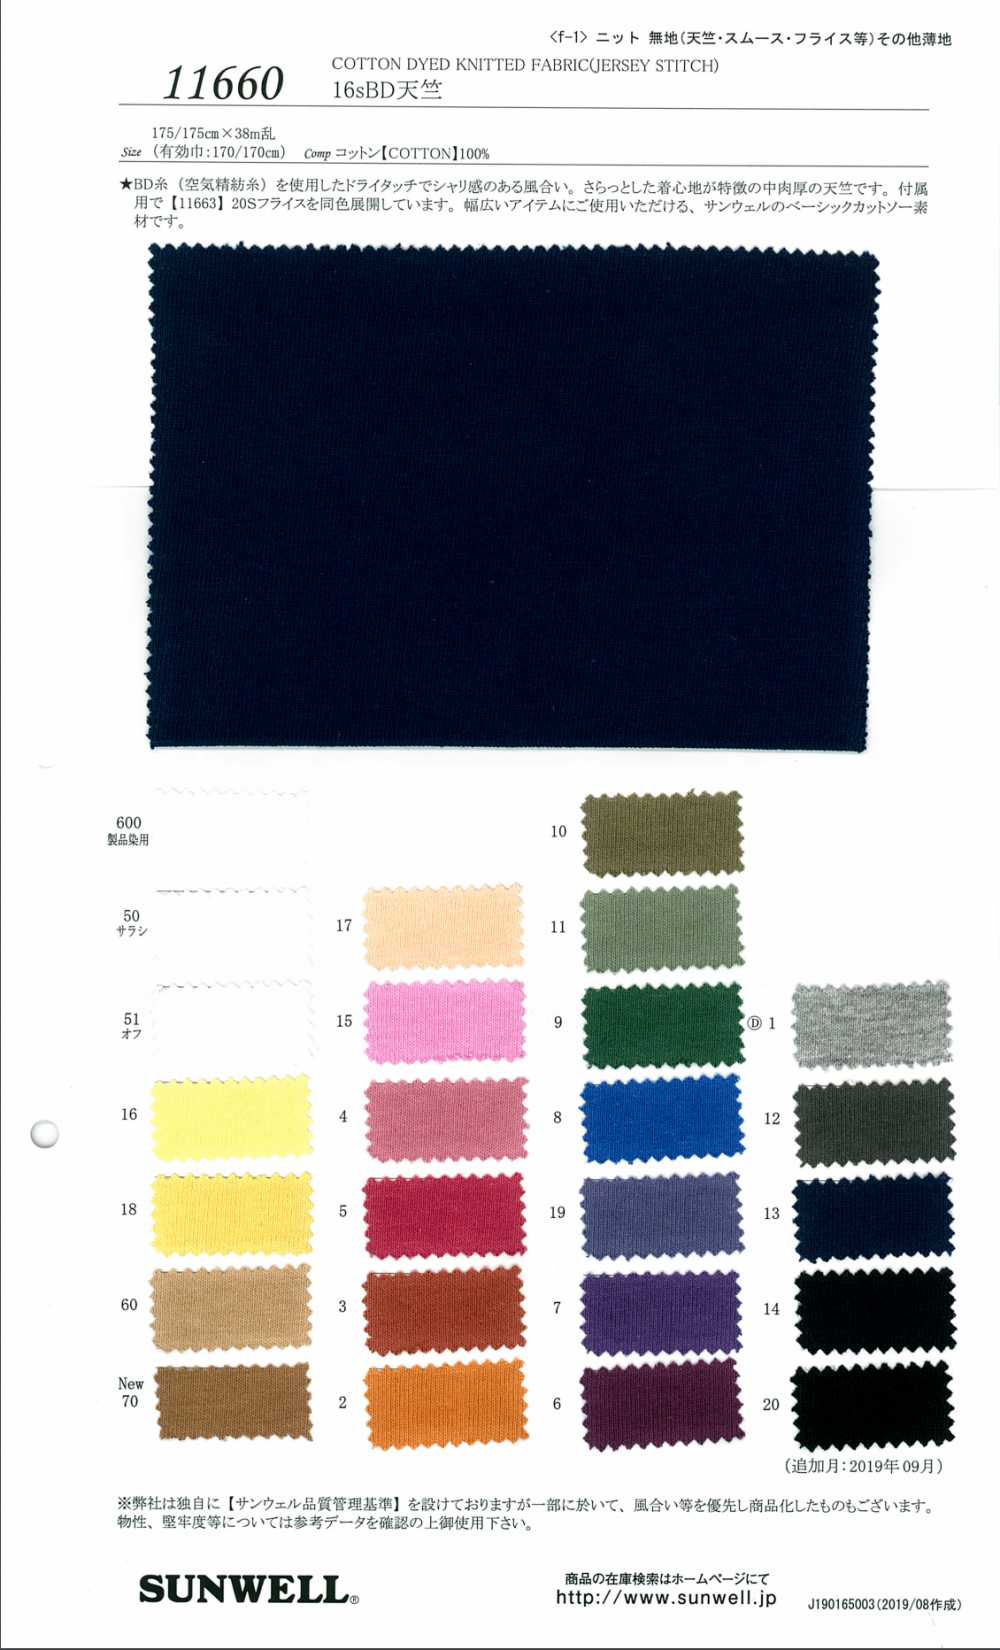 11660 16sBD Cotton Jersey[Textile / Fabric] SUNWELL